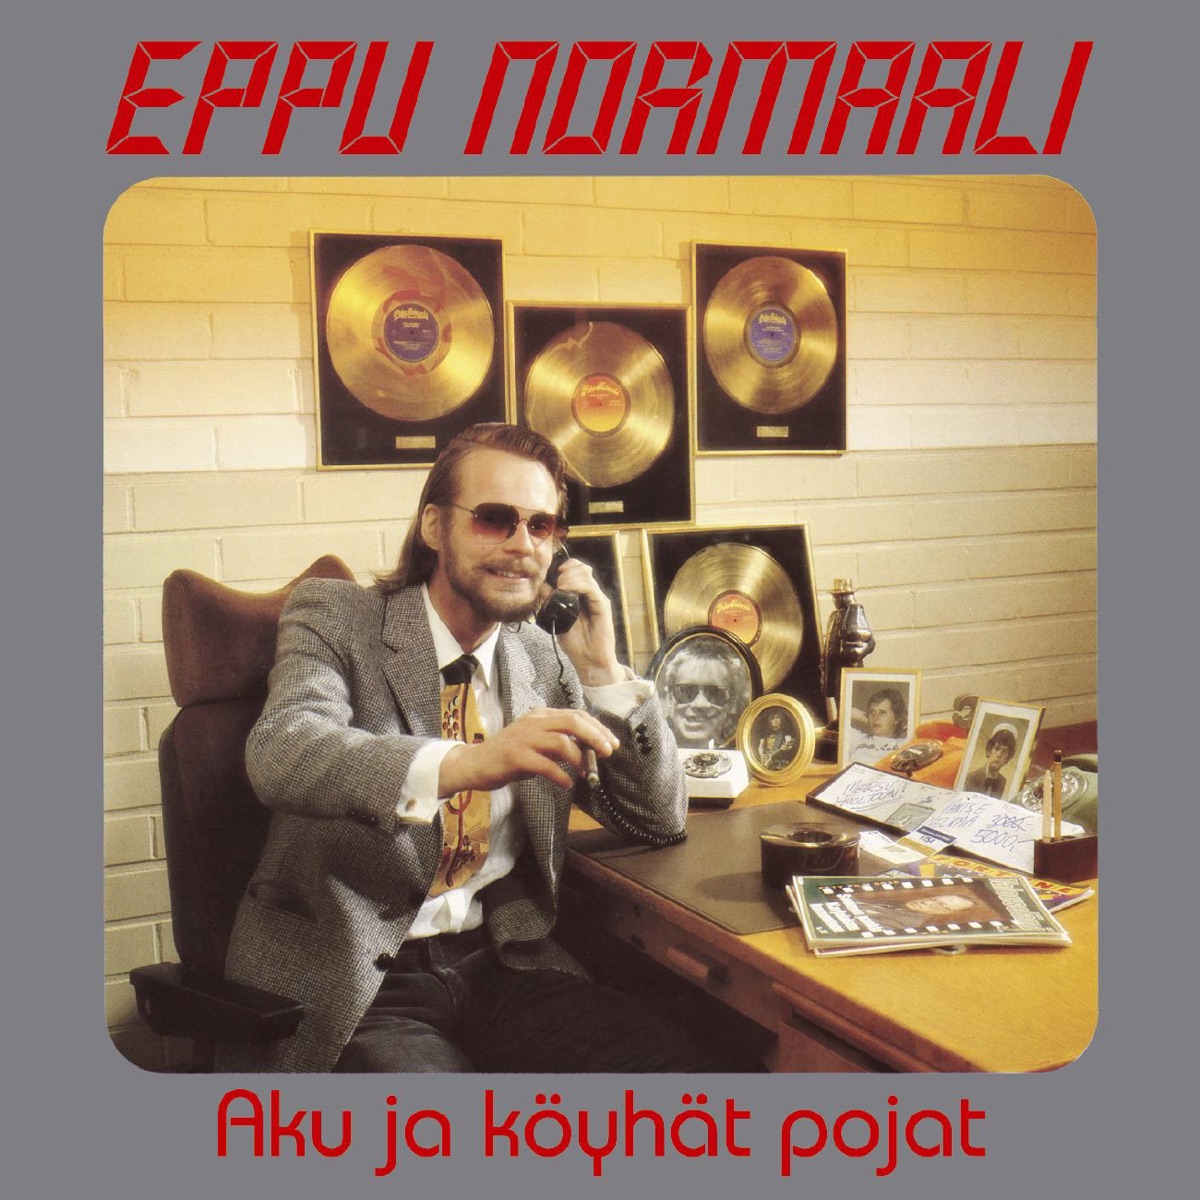 Akun Tehdas - Album by Eppu Normaali - Apple Music